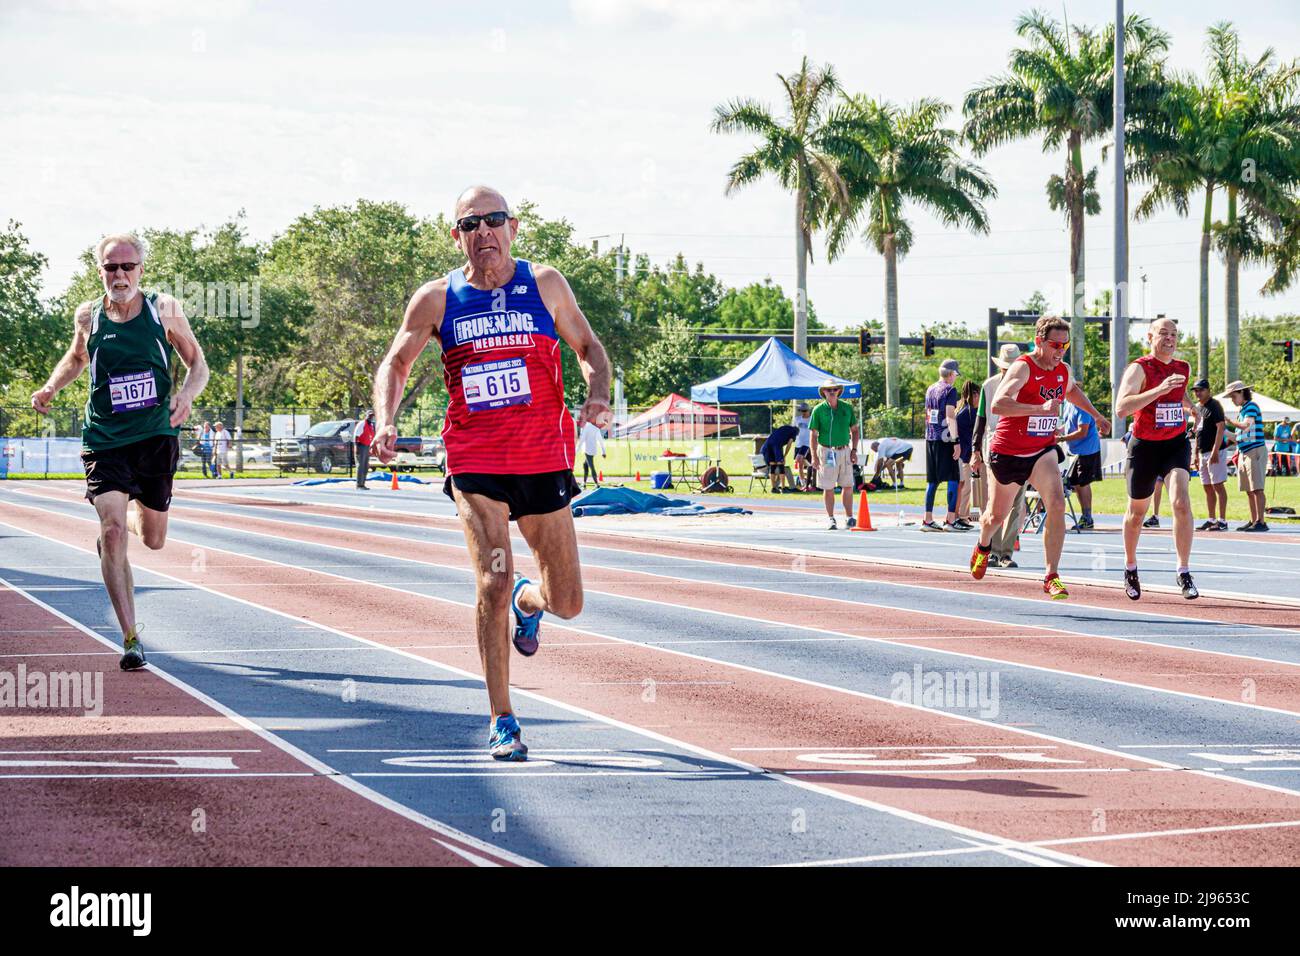 Fort ft. Lauderdale Florida, Ansin Sports Complex Track & Field National Senior Games, seniors hommes coureurs course concurrents Banque D'Images